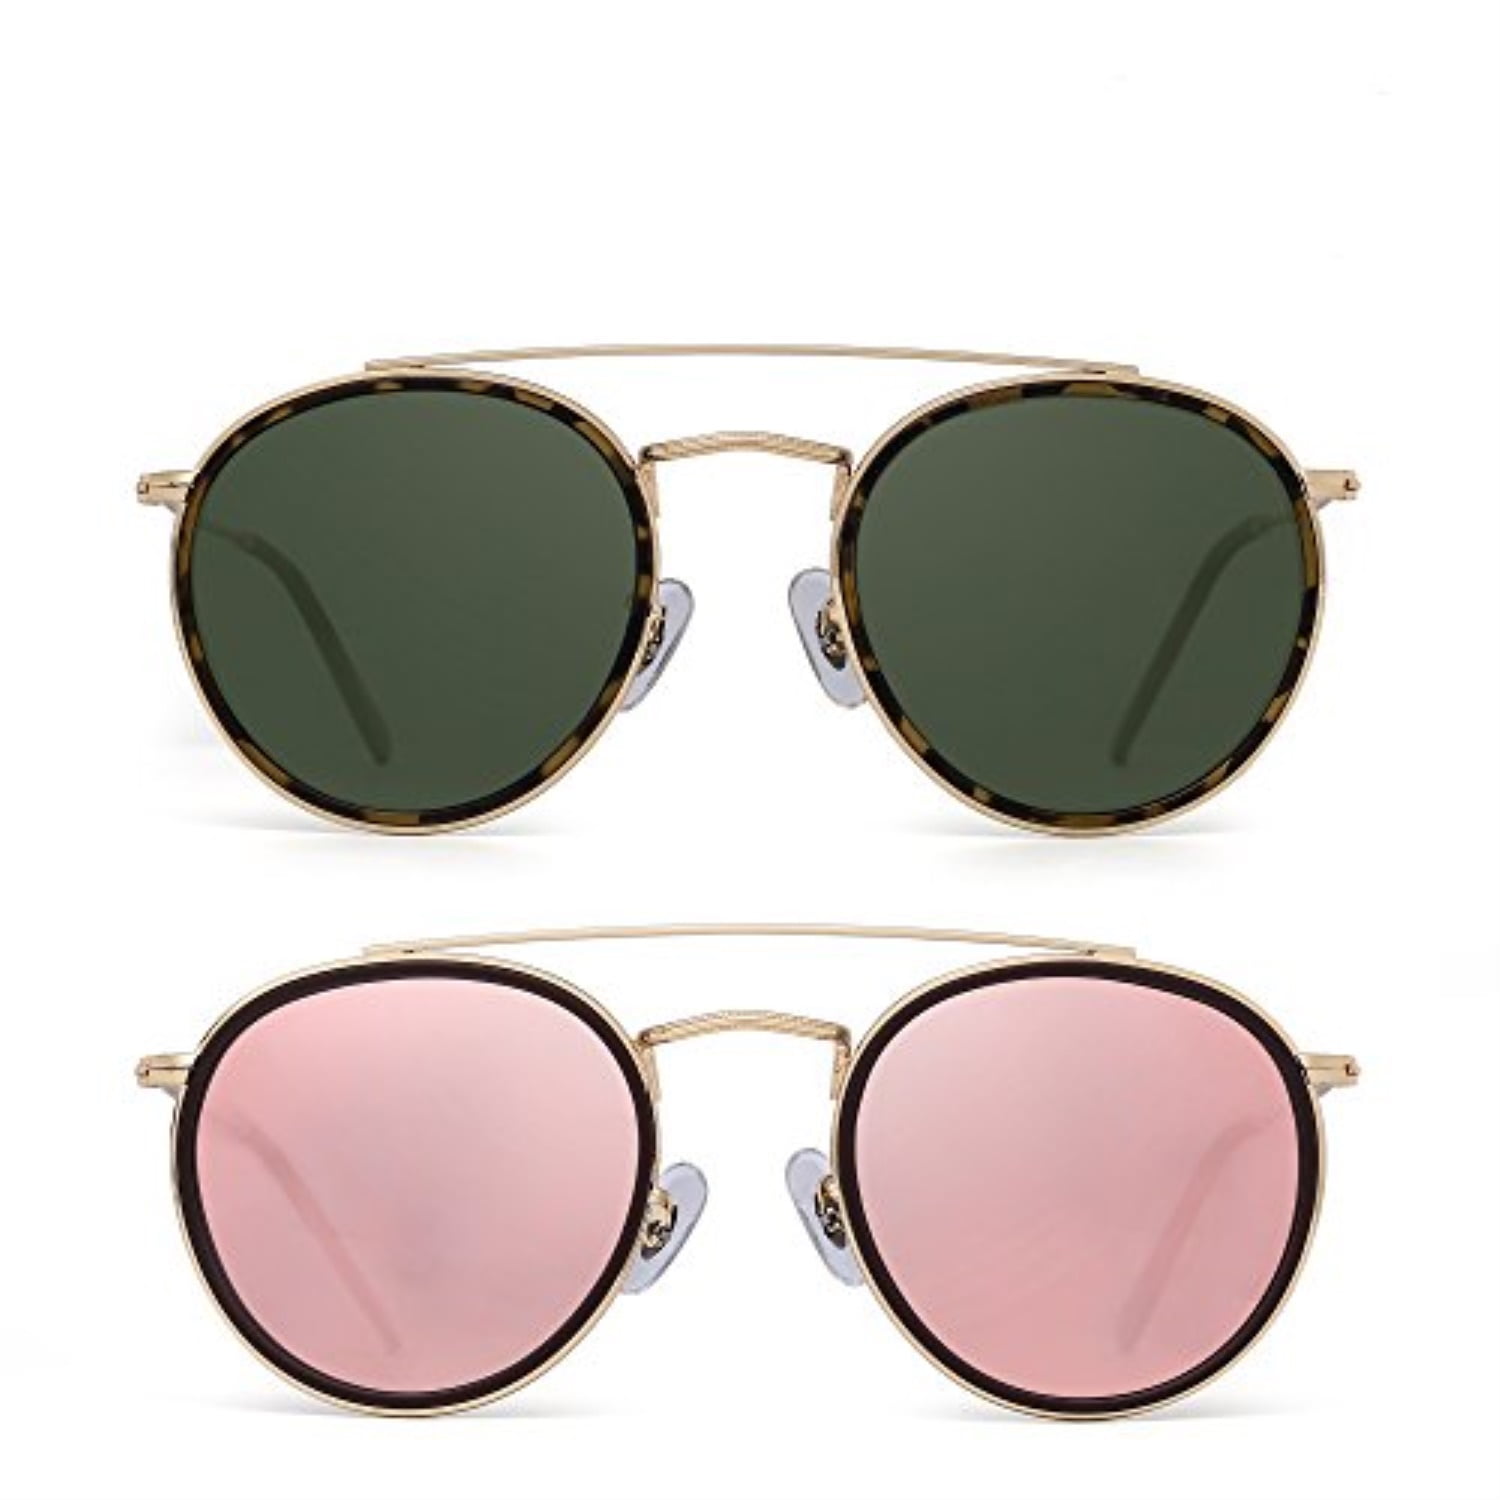 jim halo small polarized round sunglasses women vintage double bridge frame 2 pack (green & pink) - Walmart.com